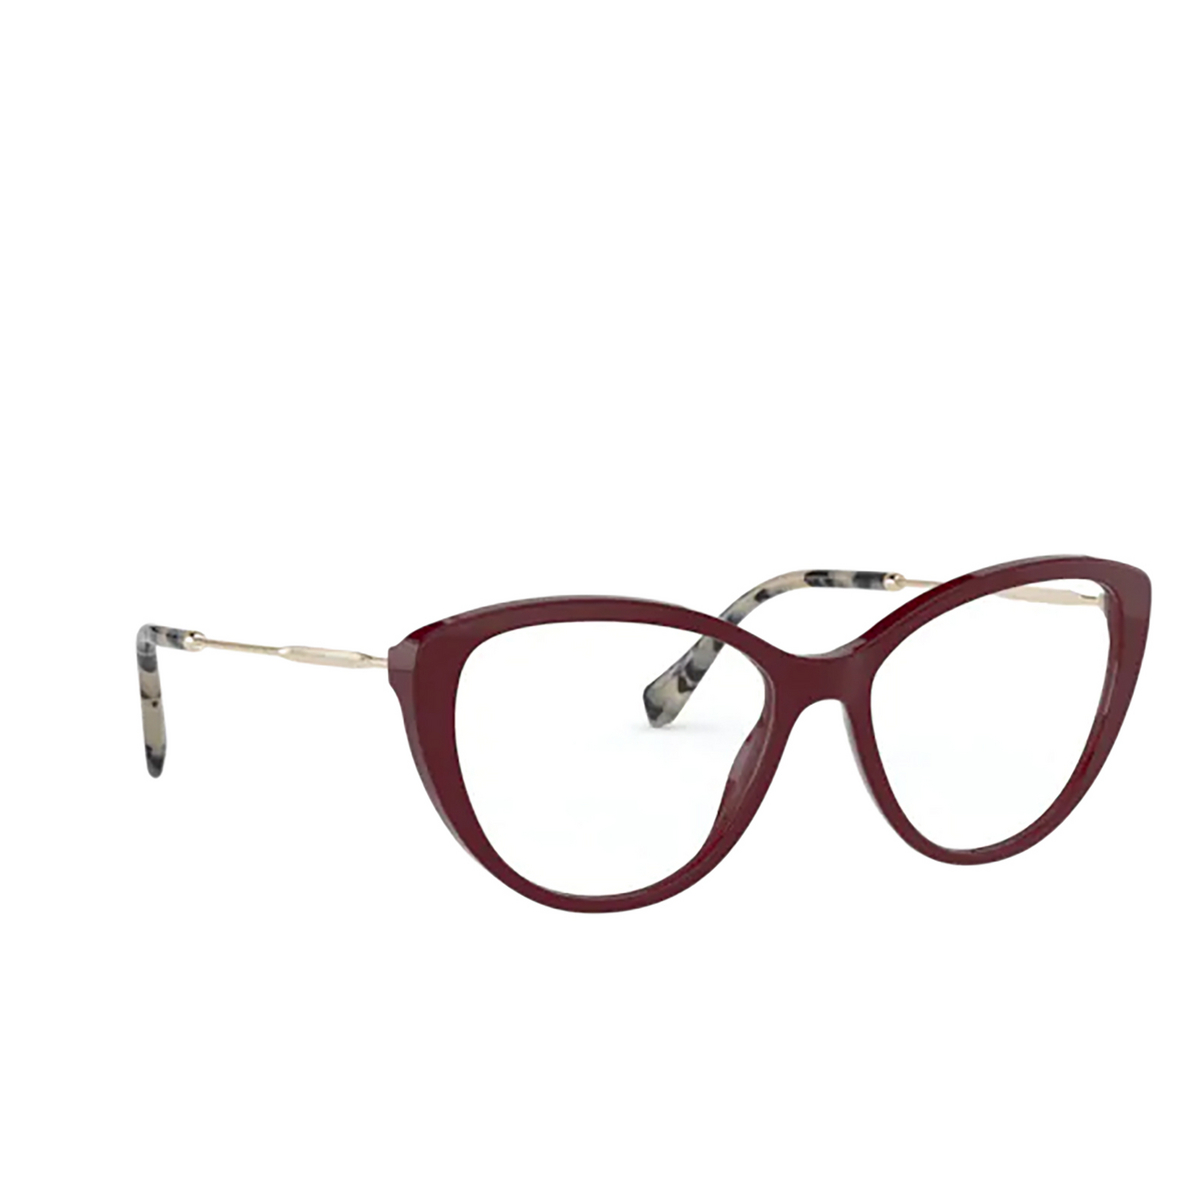 Miu Miu® Cat-eye Eyeglasses: MU 02SV color Bordeaux USH1O1 - three-quarters view.